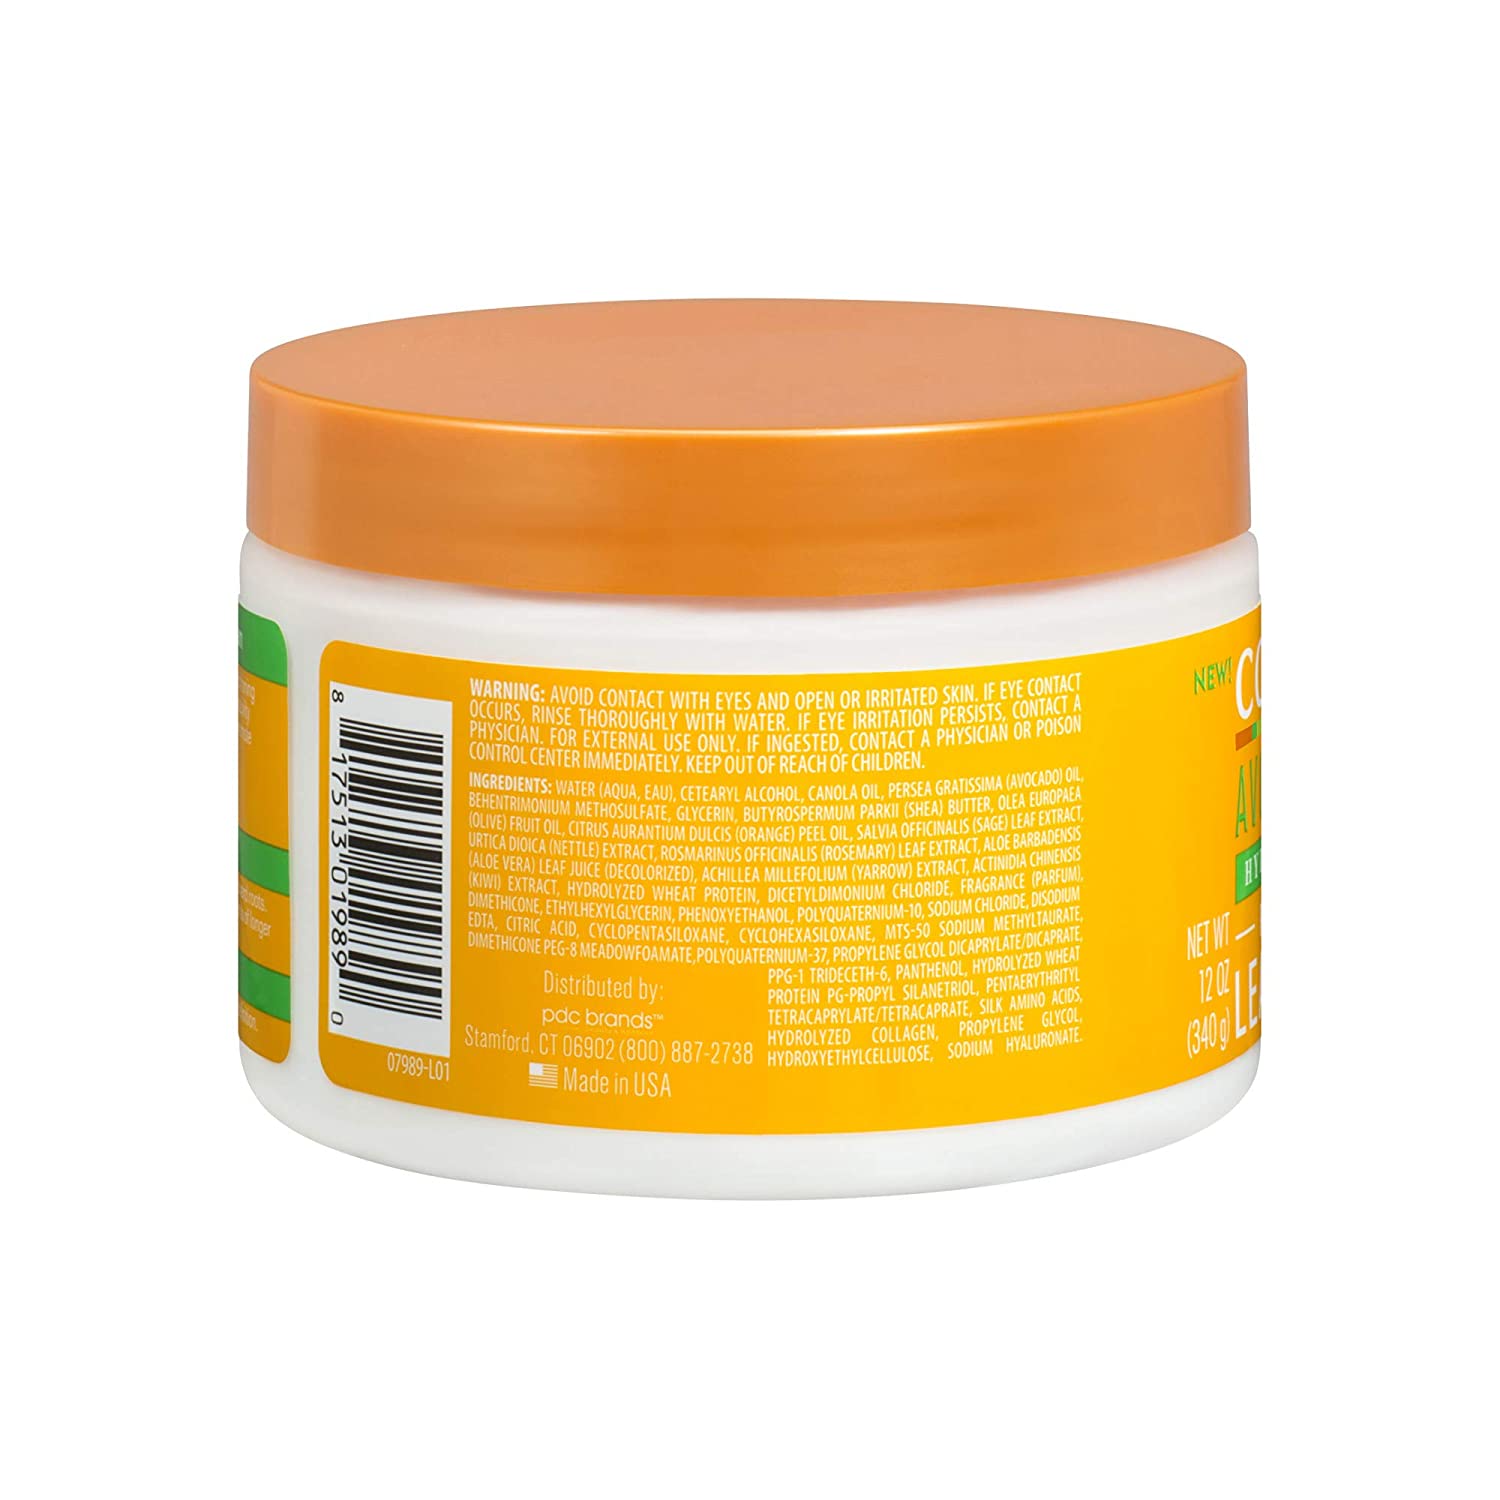 Avocado Leave-In Conditioning Cream-340g